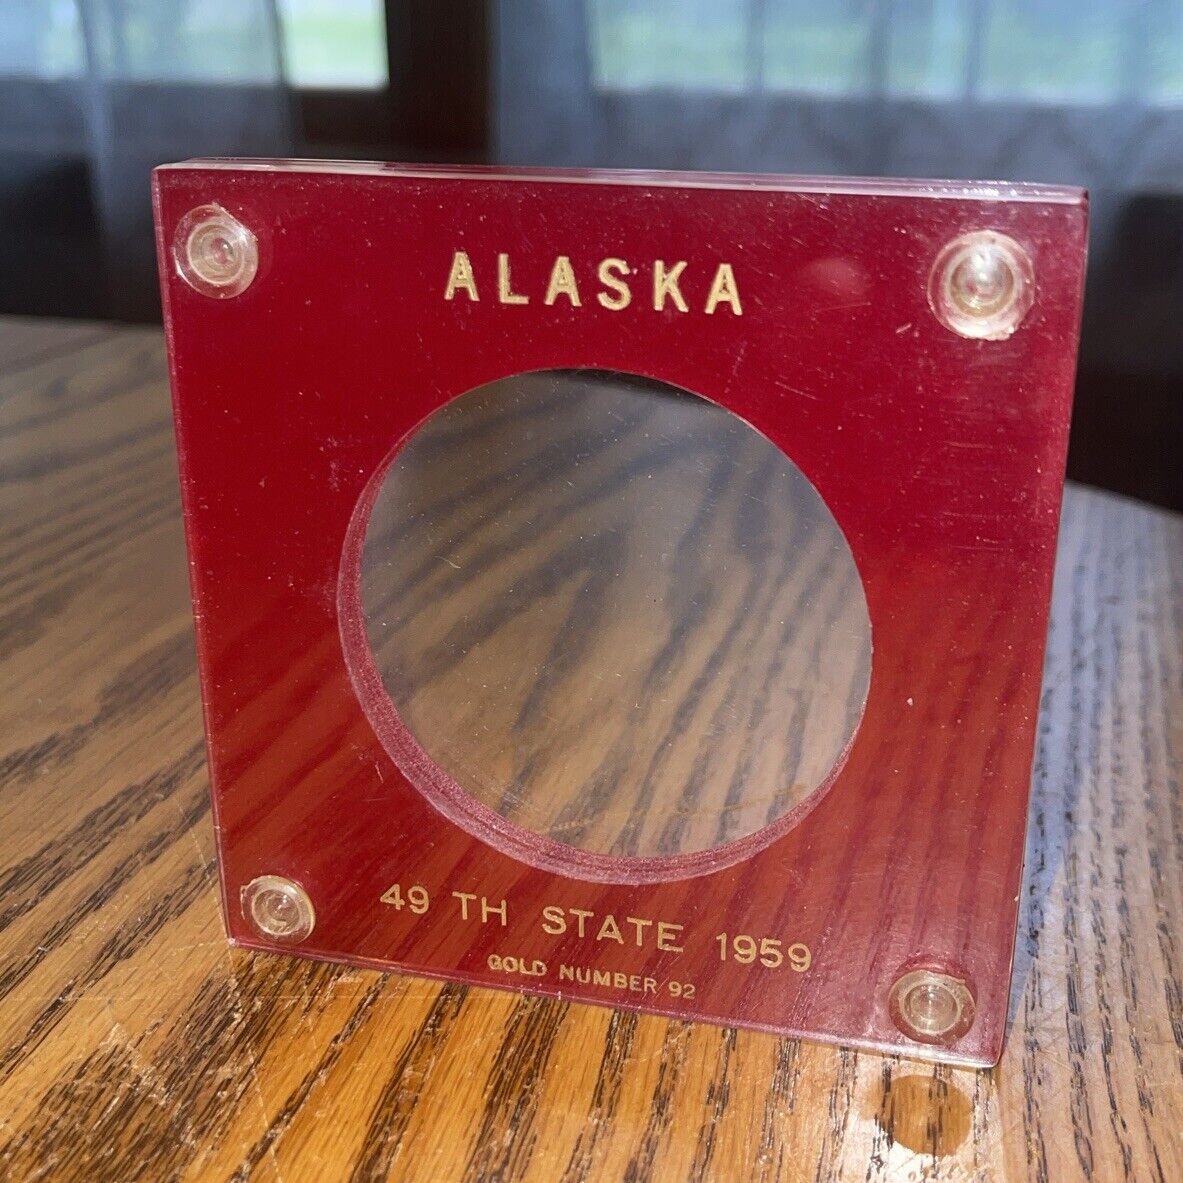 Capital Holder For Alaska 49th state 1959 Gold Number 92 Red Case